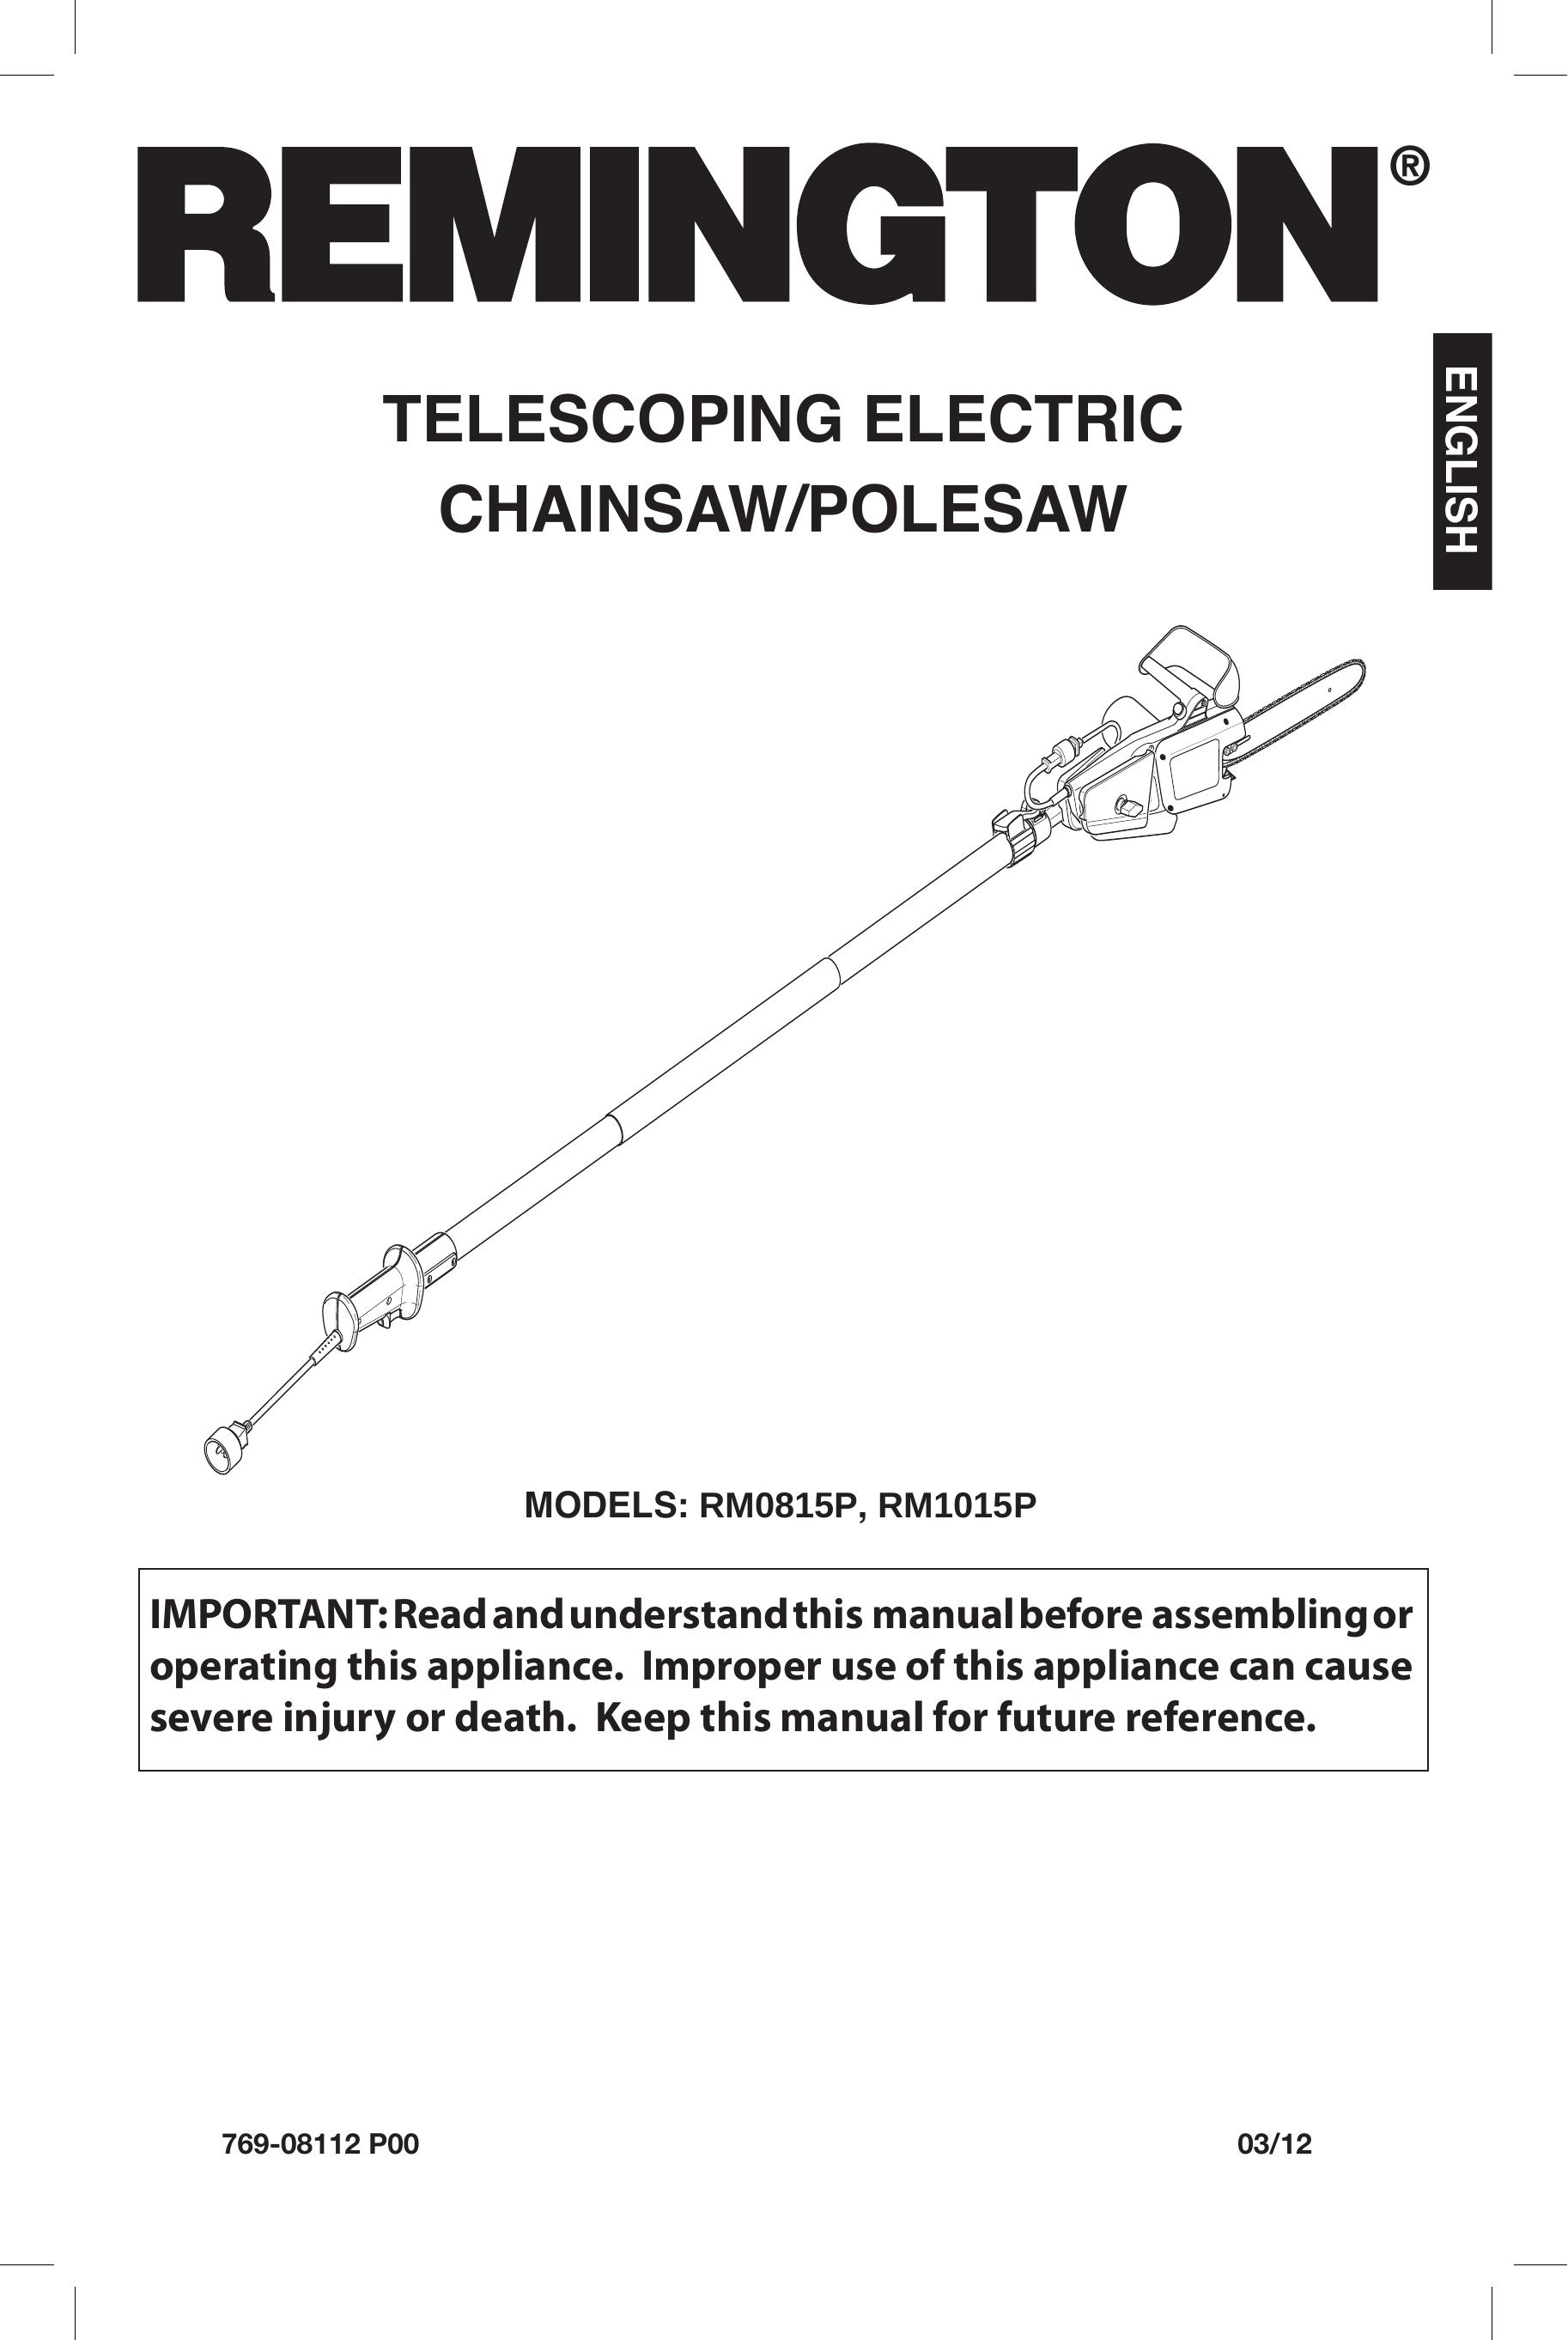 Remington Power Tools RM1015P Pole Saw User Manual